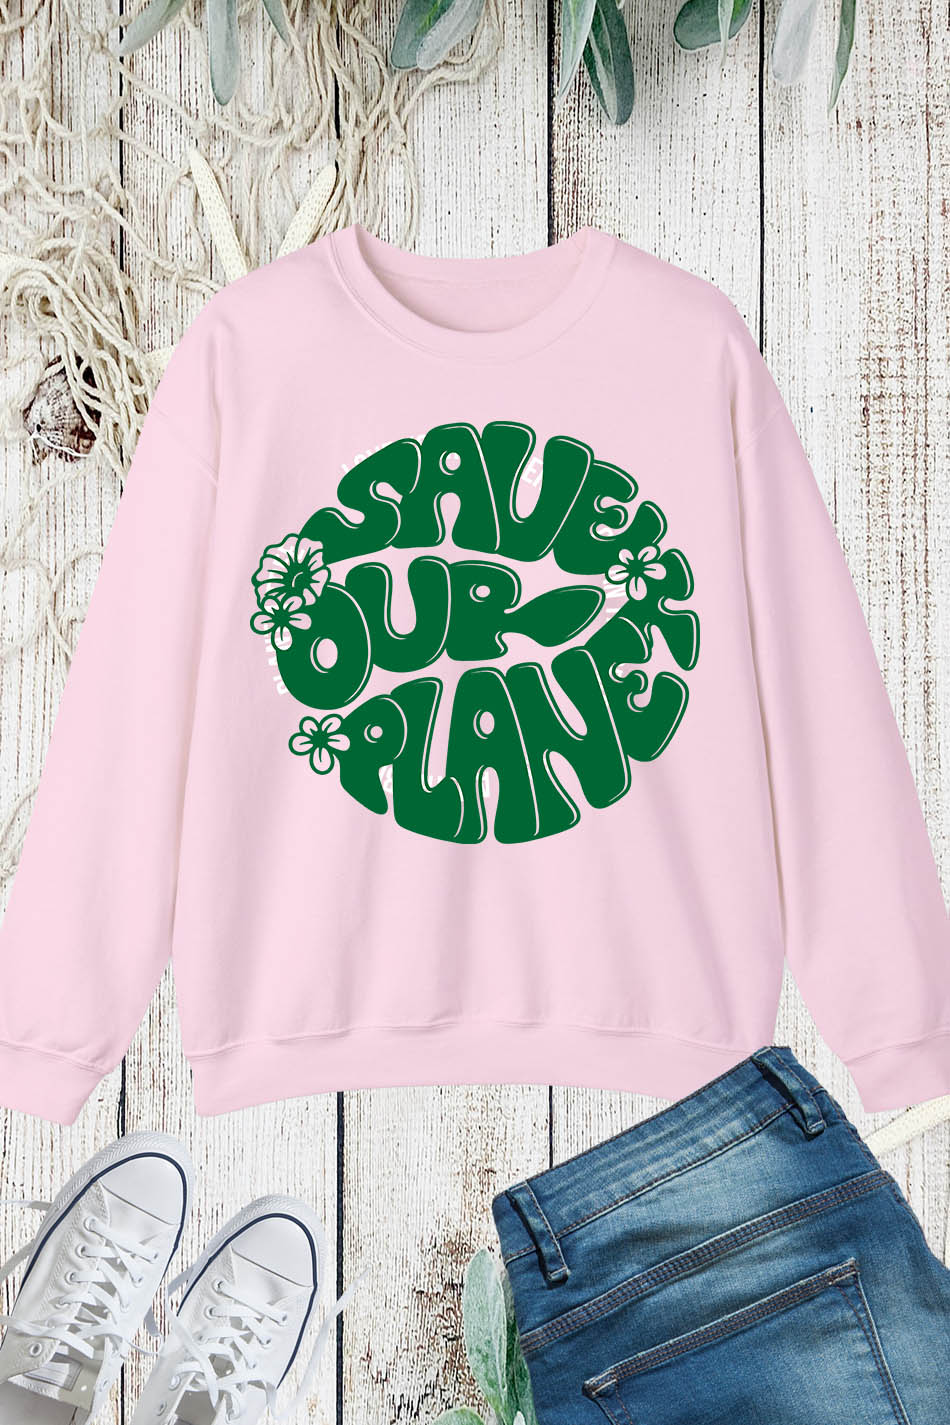 Save our Planet Tee Sweatshirt